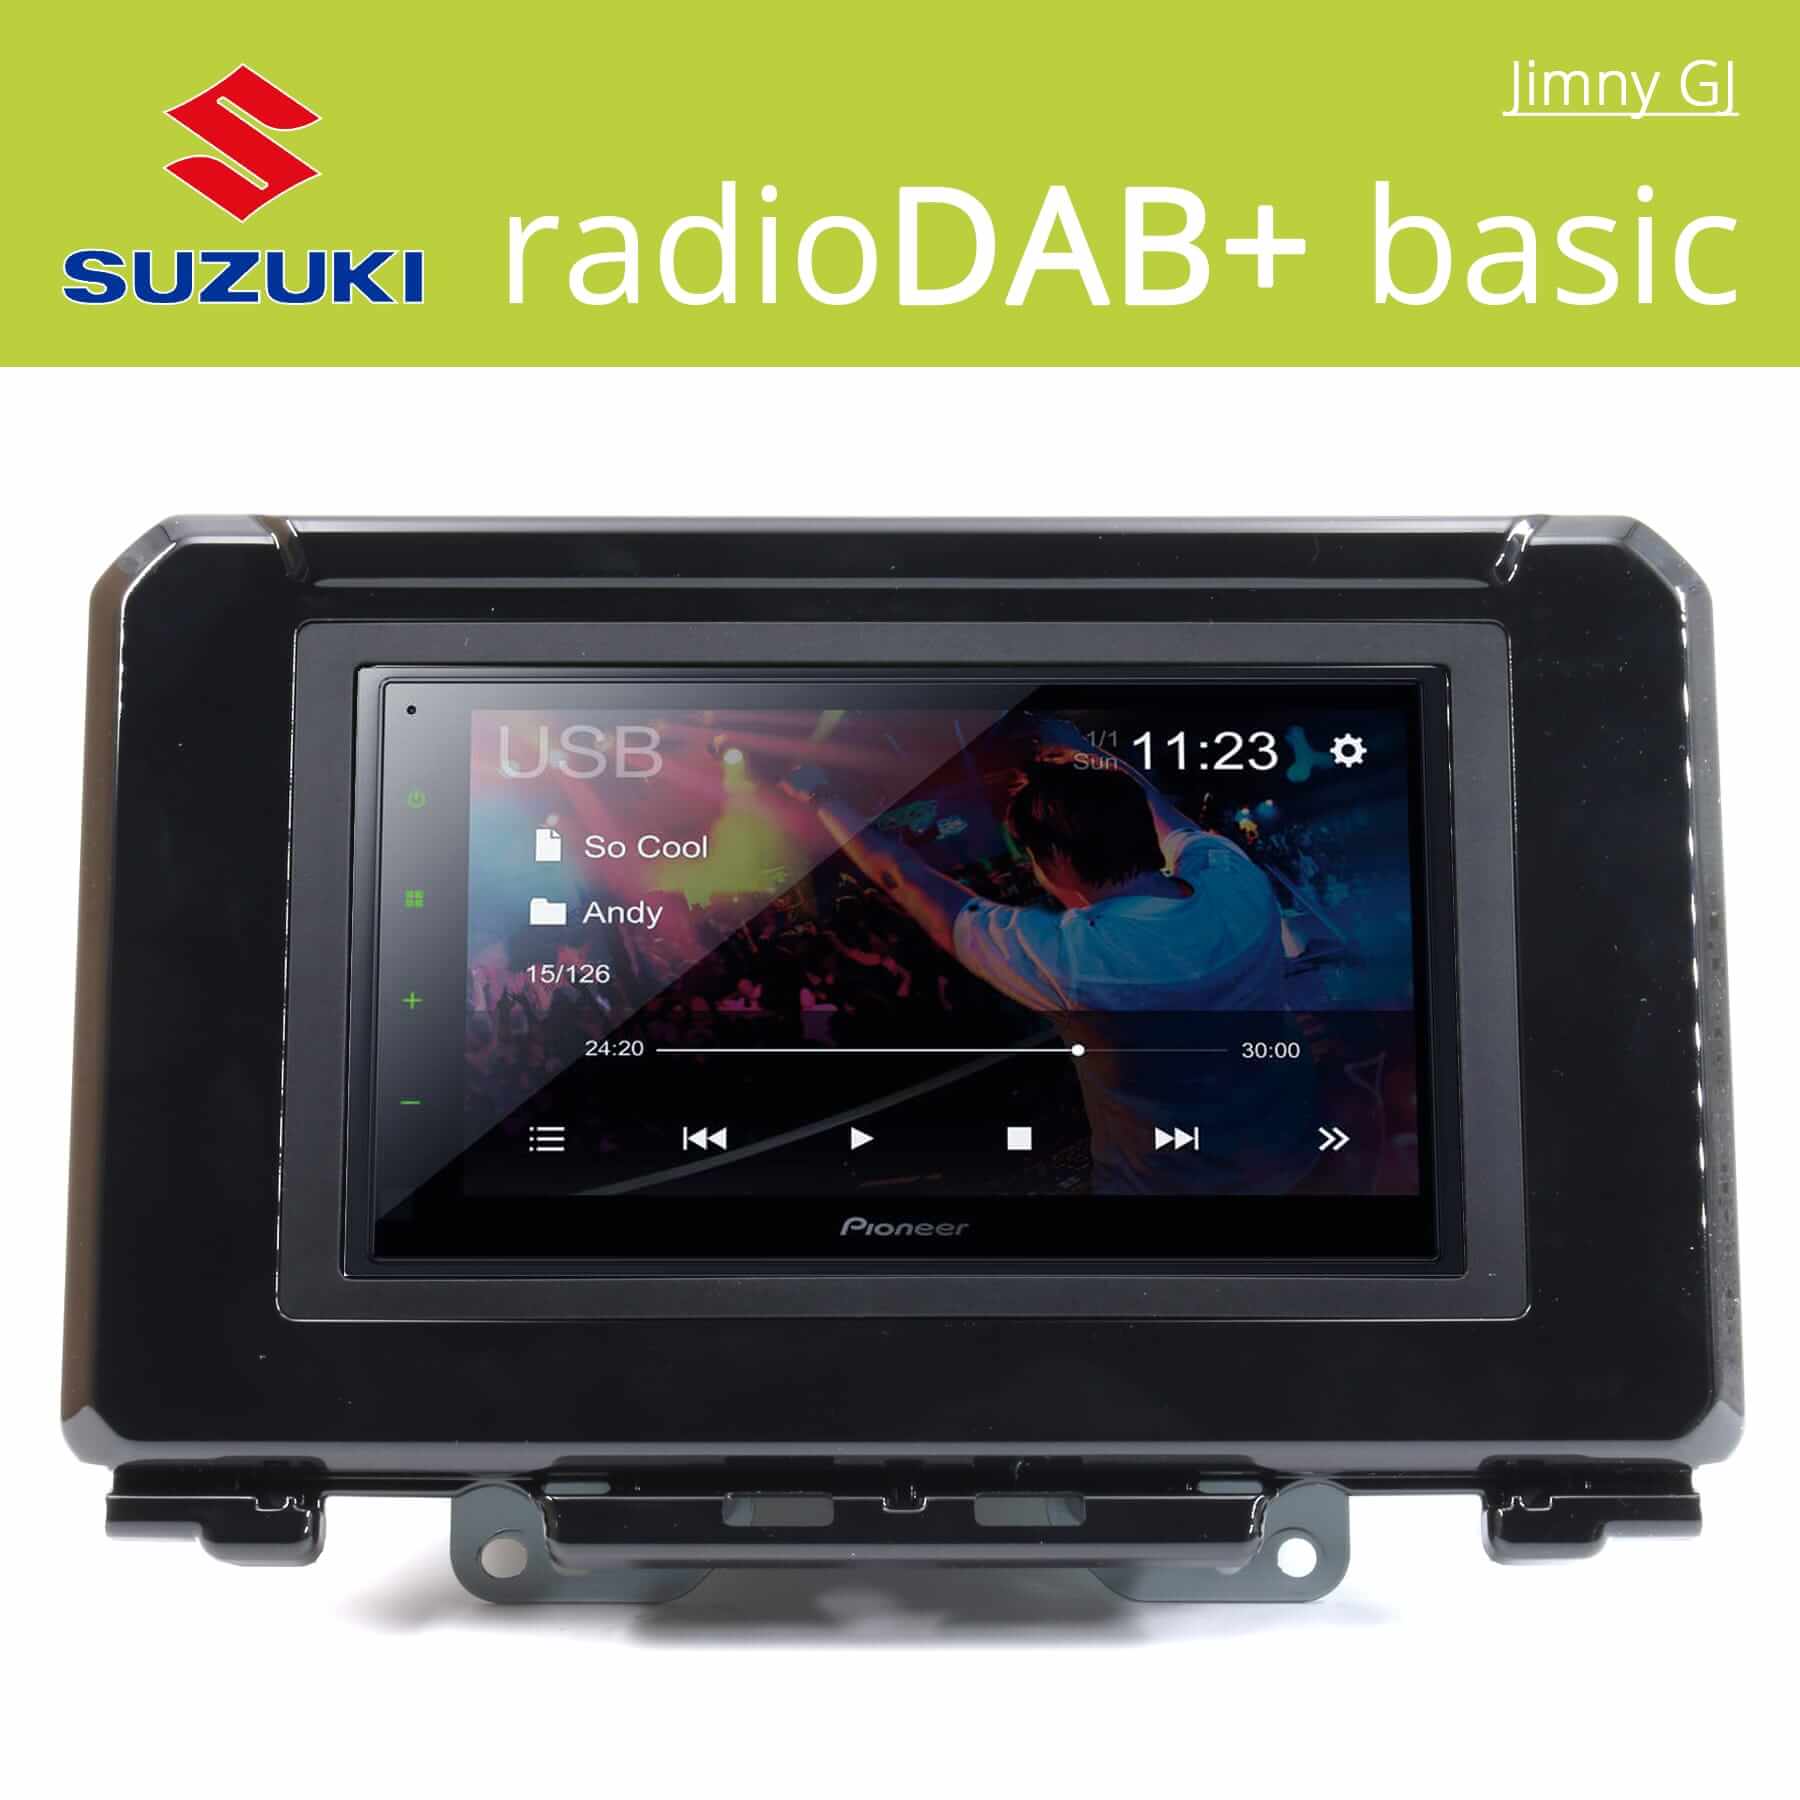 Suzuki Jimny Gj NFZ DAB+ Basis Radio